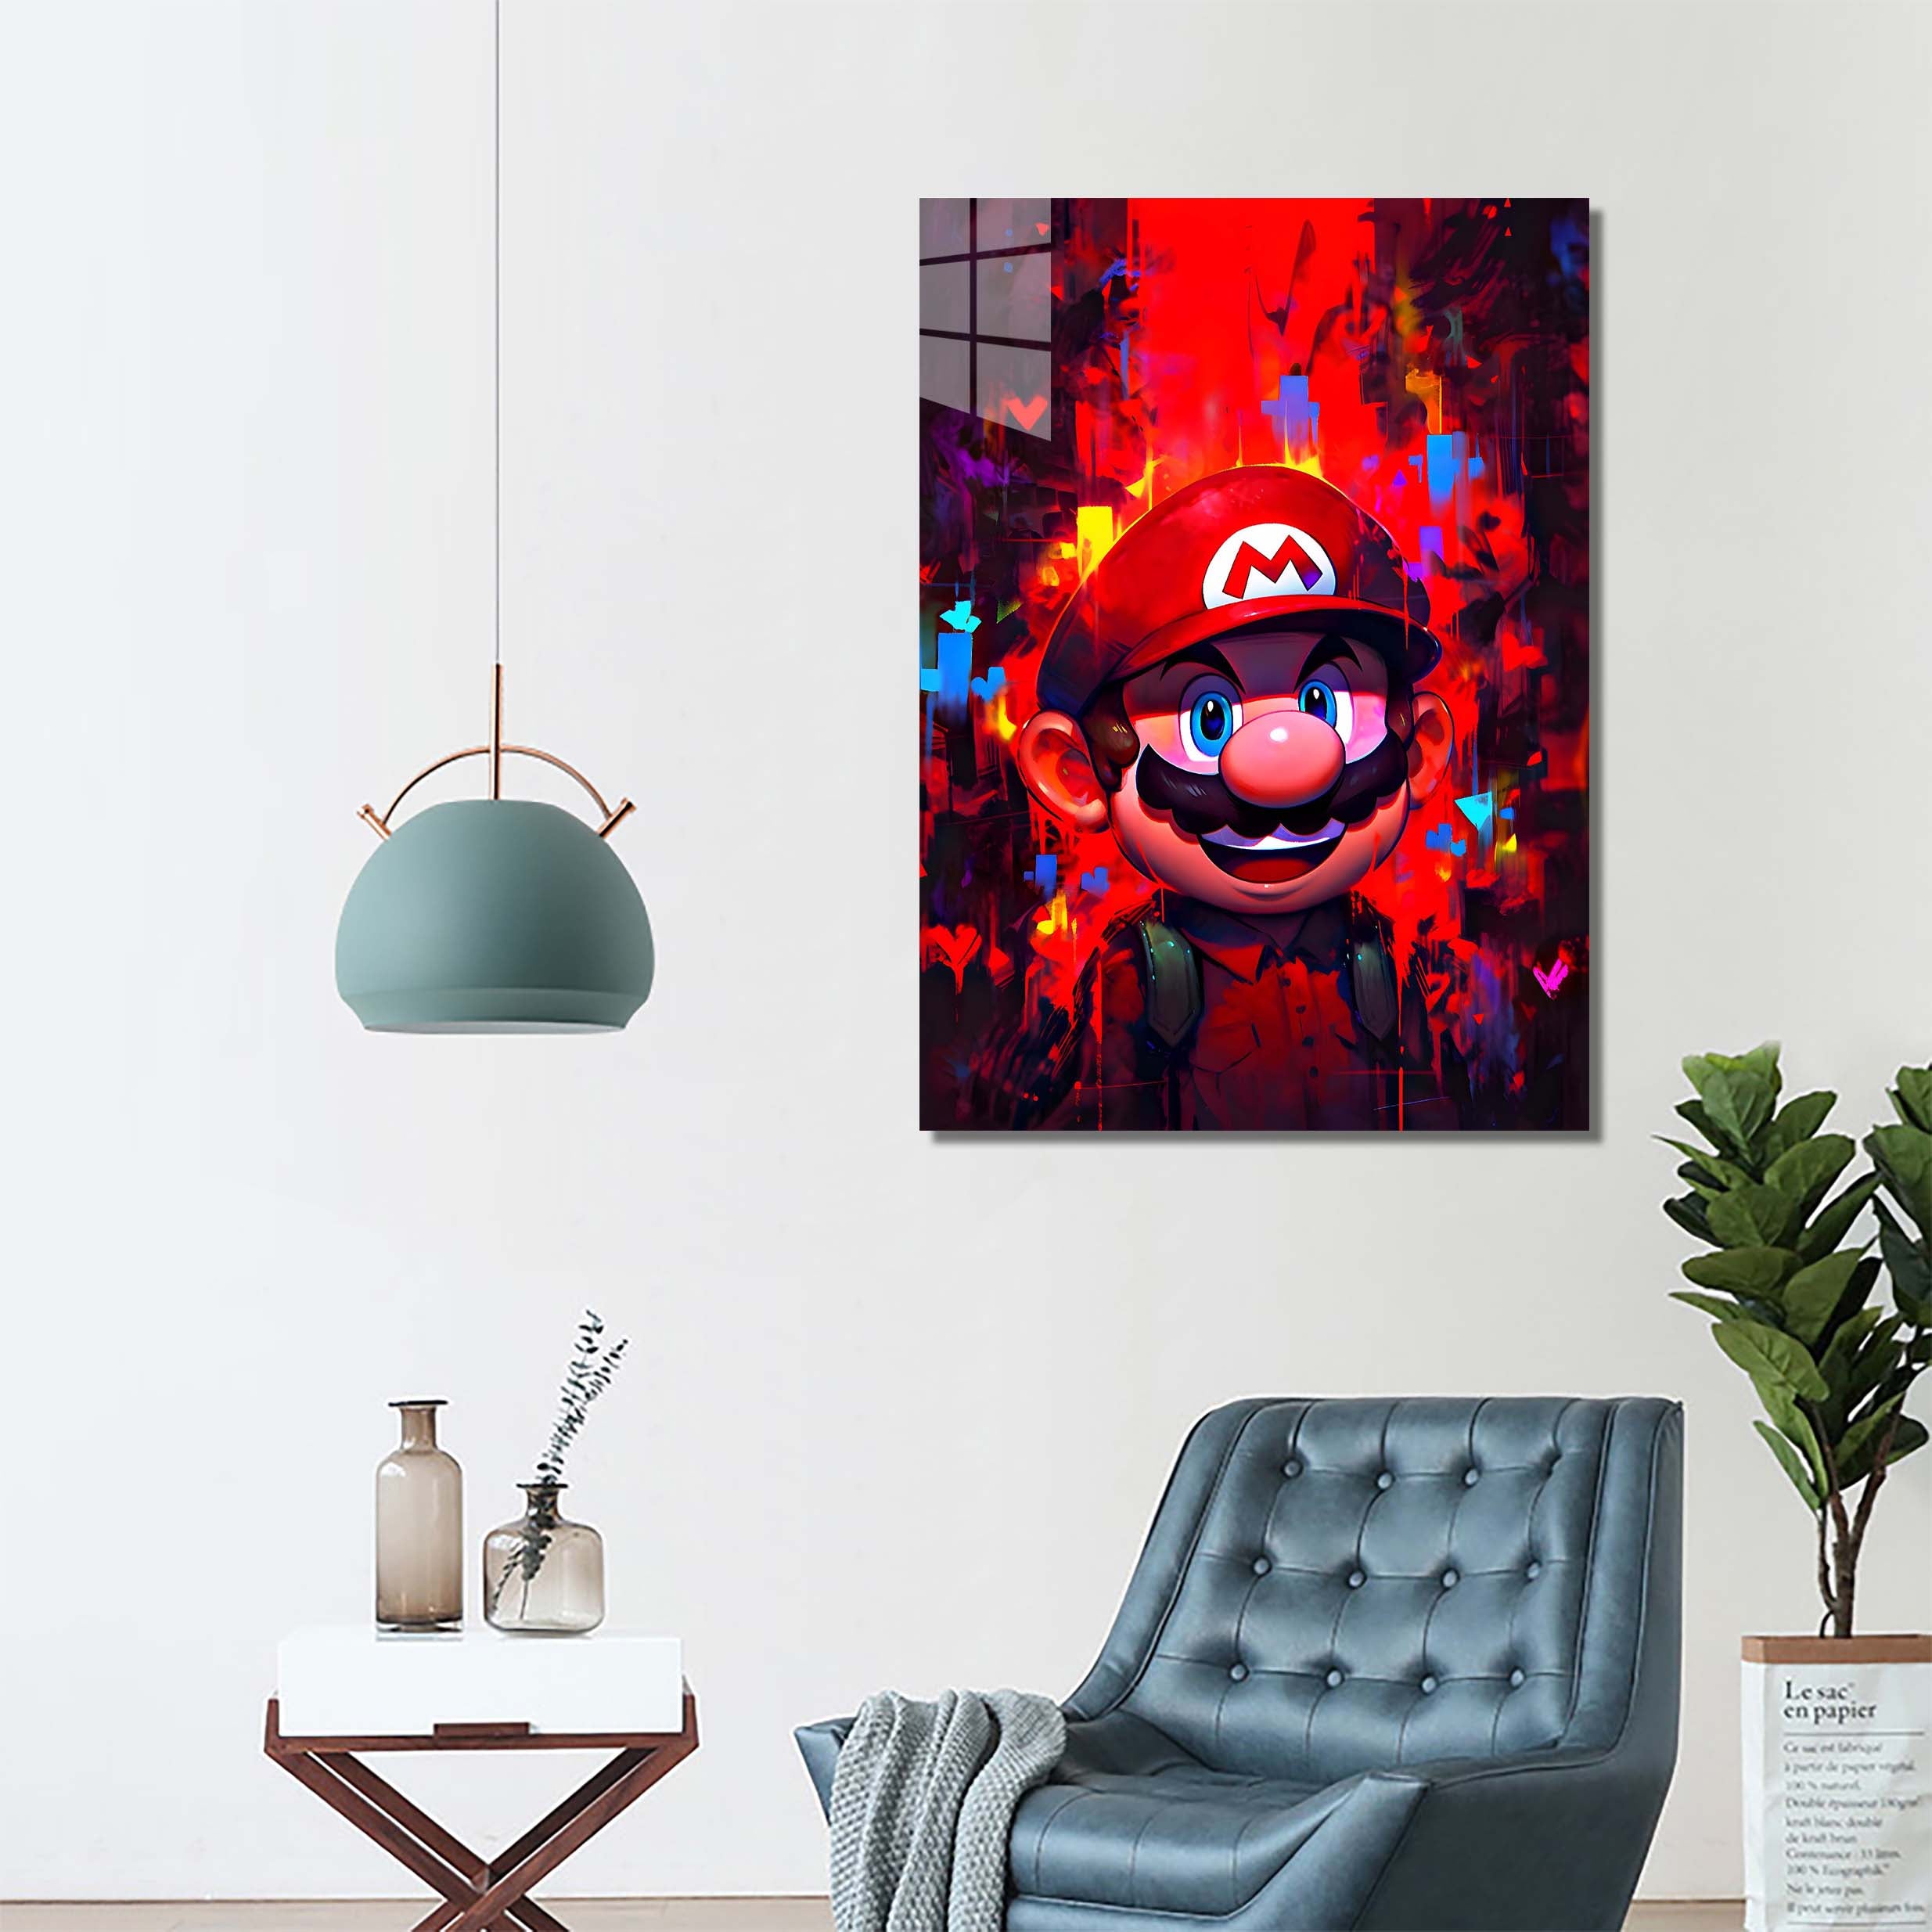 Mario chromatic-designed by @Vid_M@tion